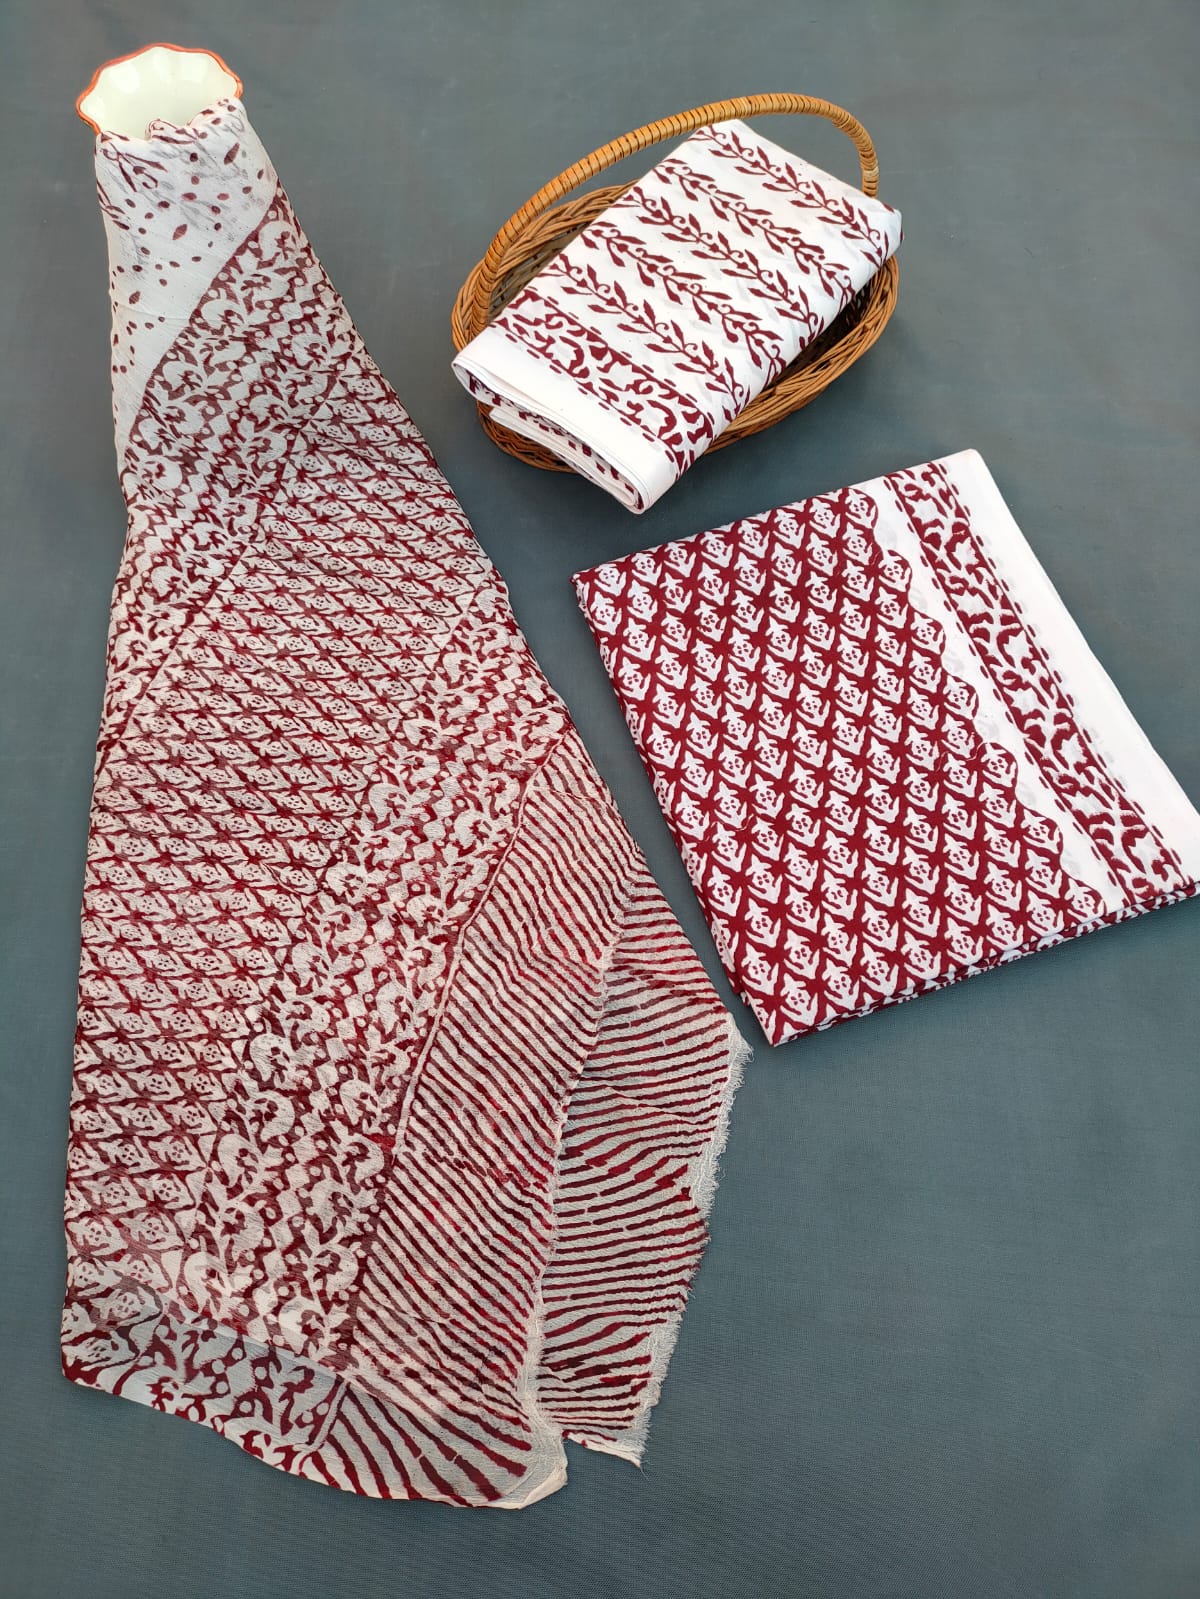 Jaipuri Unstitched Dress Material Hand Block Printed Cotton Suit With Chiffon Dupatta - JB657